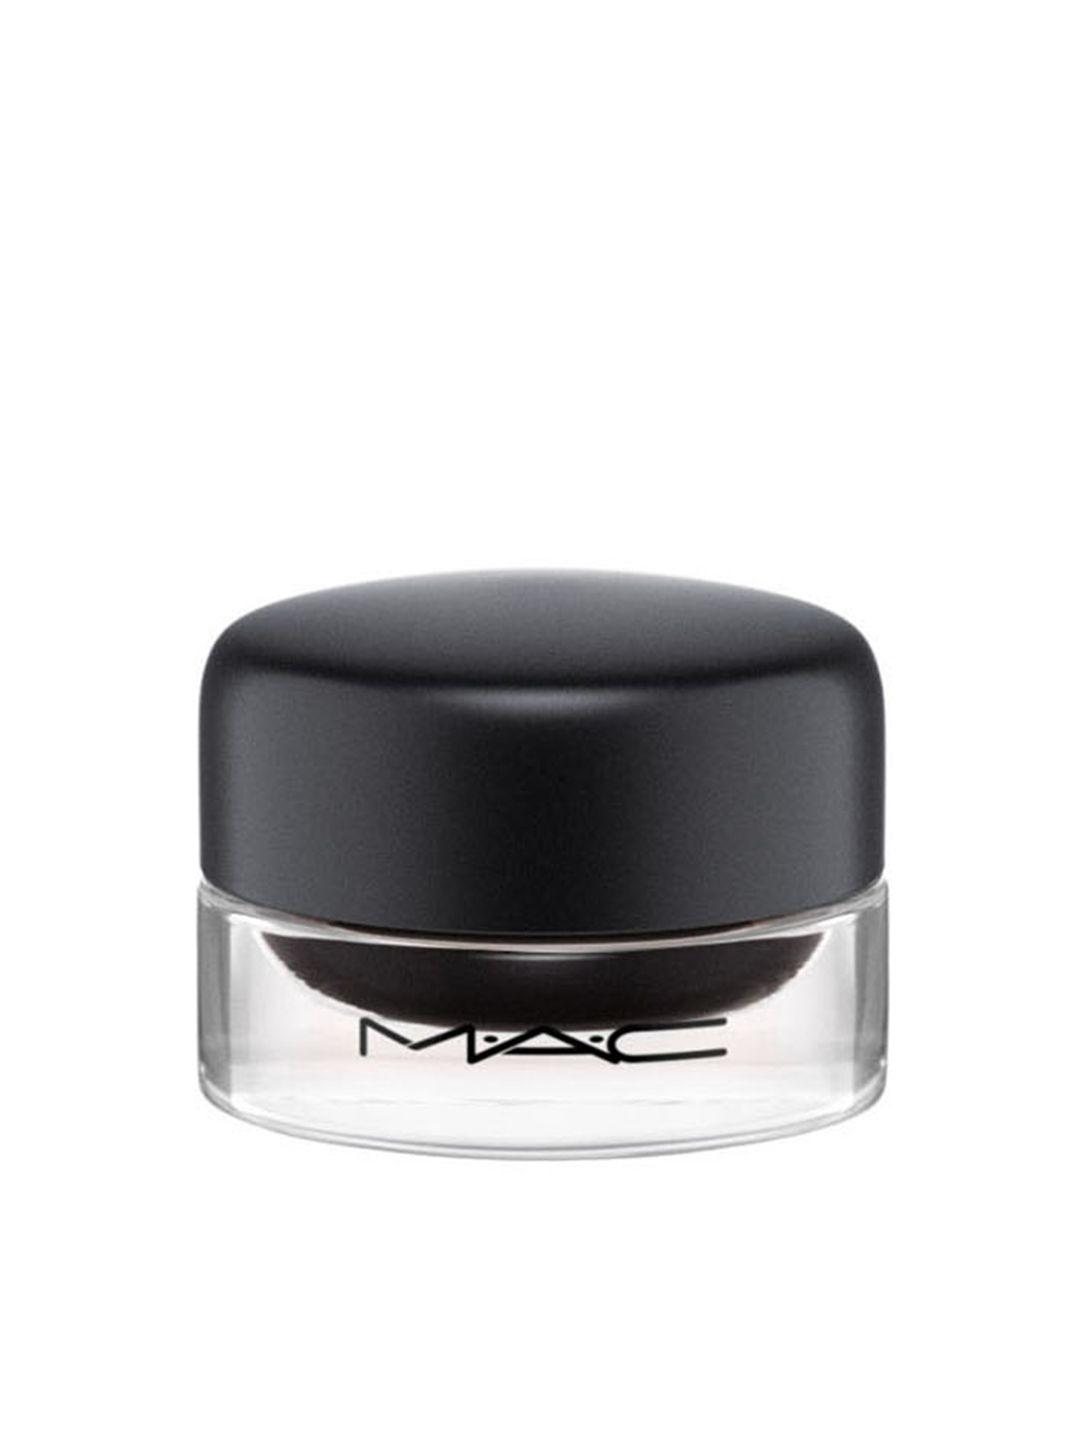 m.a.c pro longwear fluidline eyeliner and brow gel - blacktrack 3 g